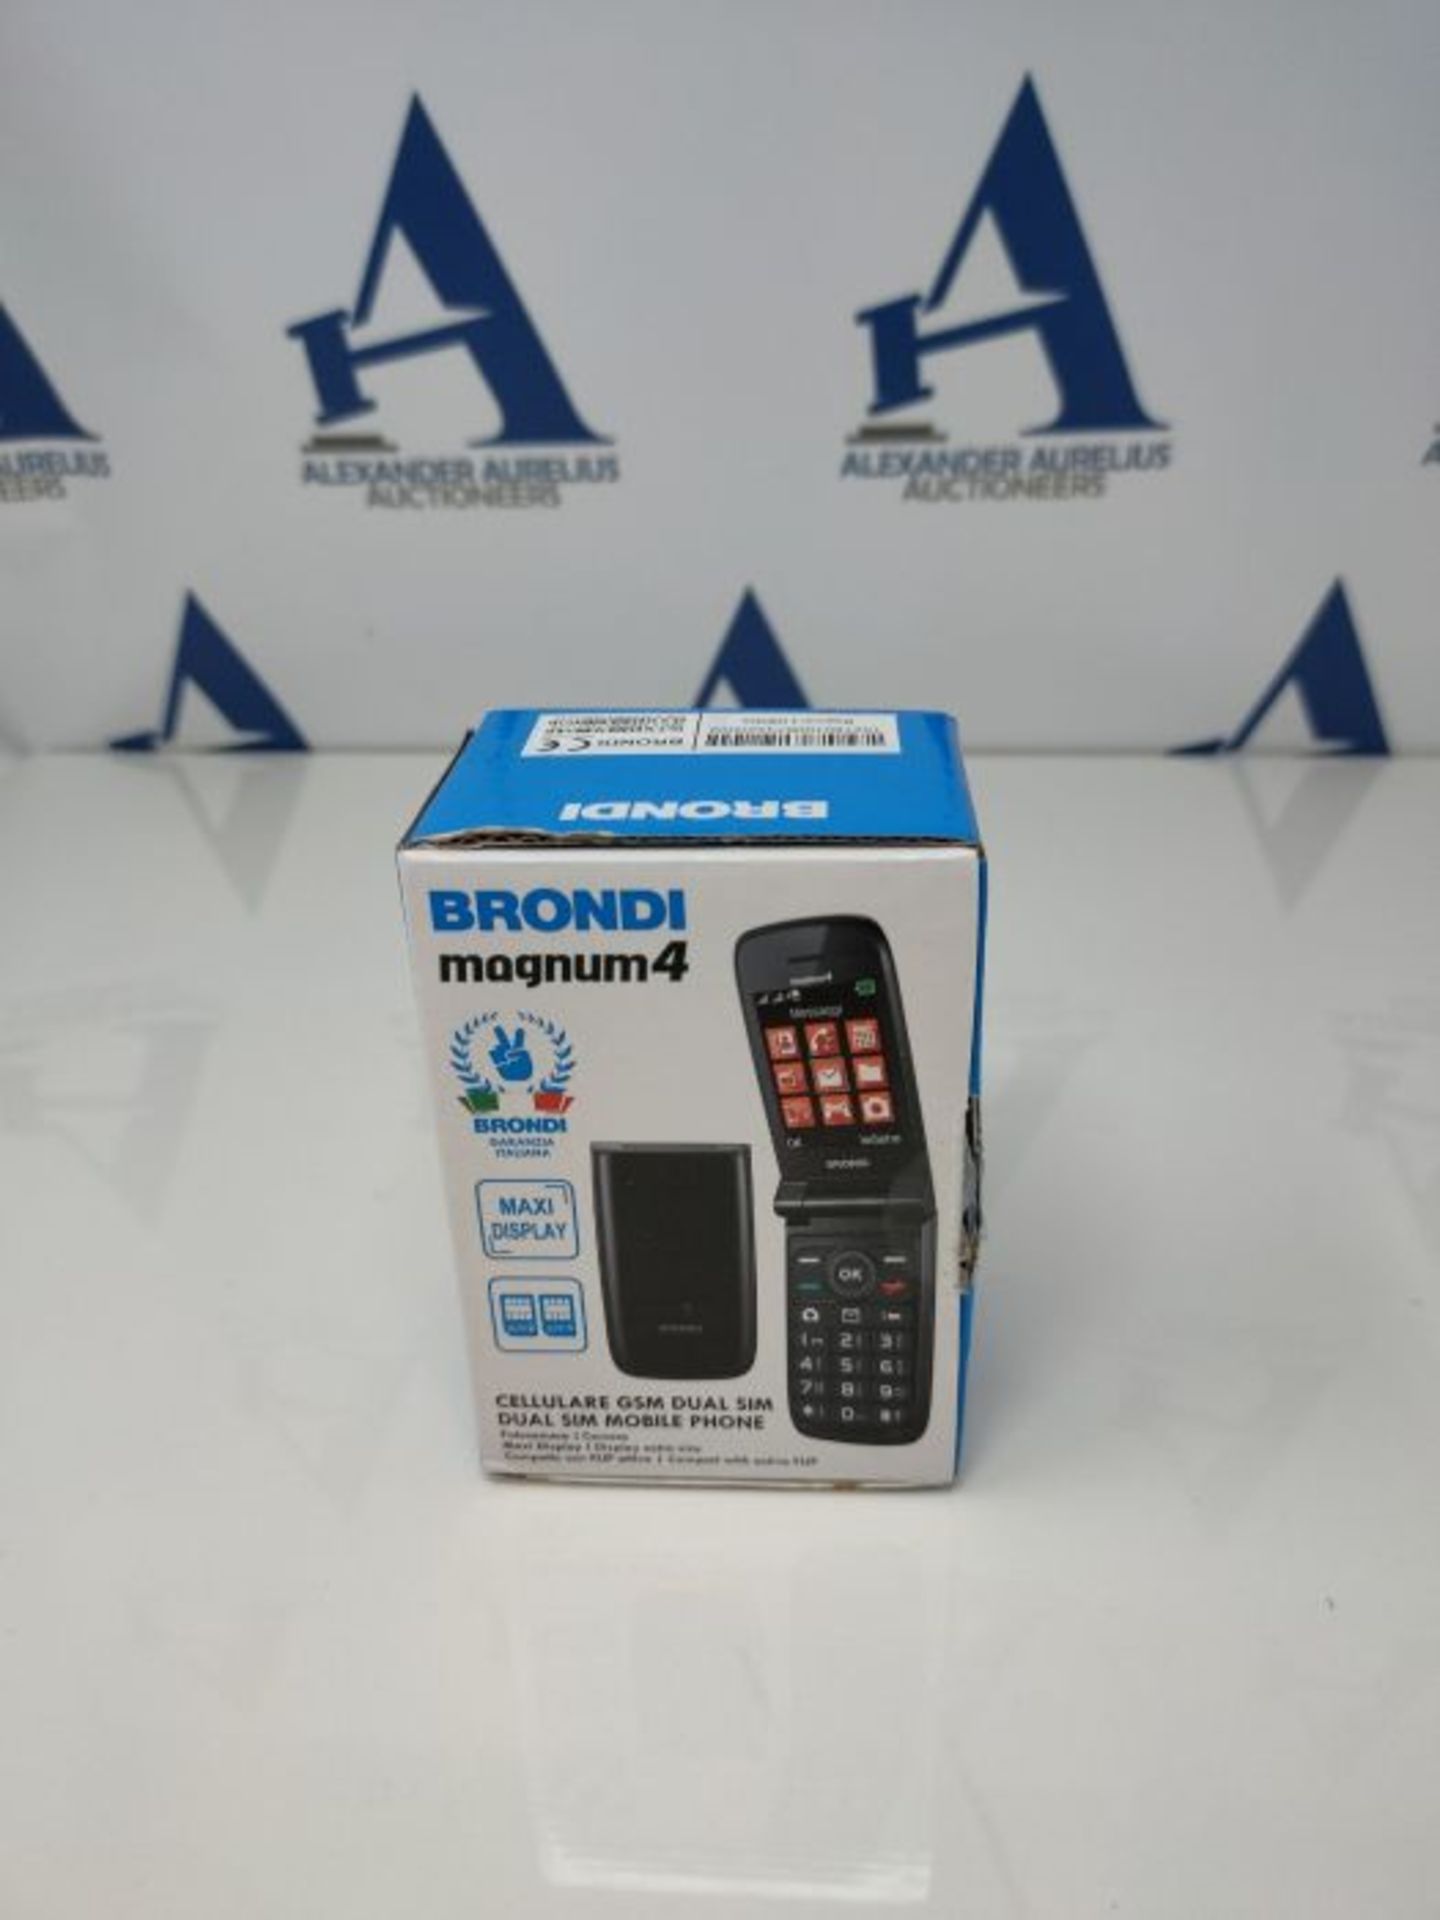 Brondi Magnum 4 Telefono Cellulare Maxi Display, Tastiera Fisica Retroilluminata, Dual - Image 2 of 3